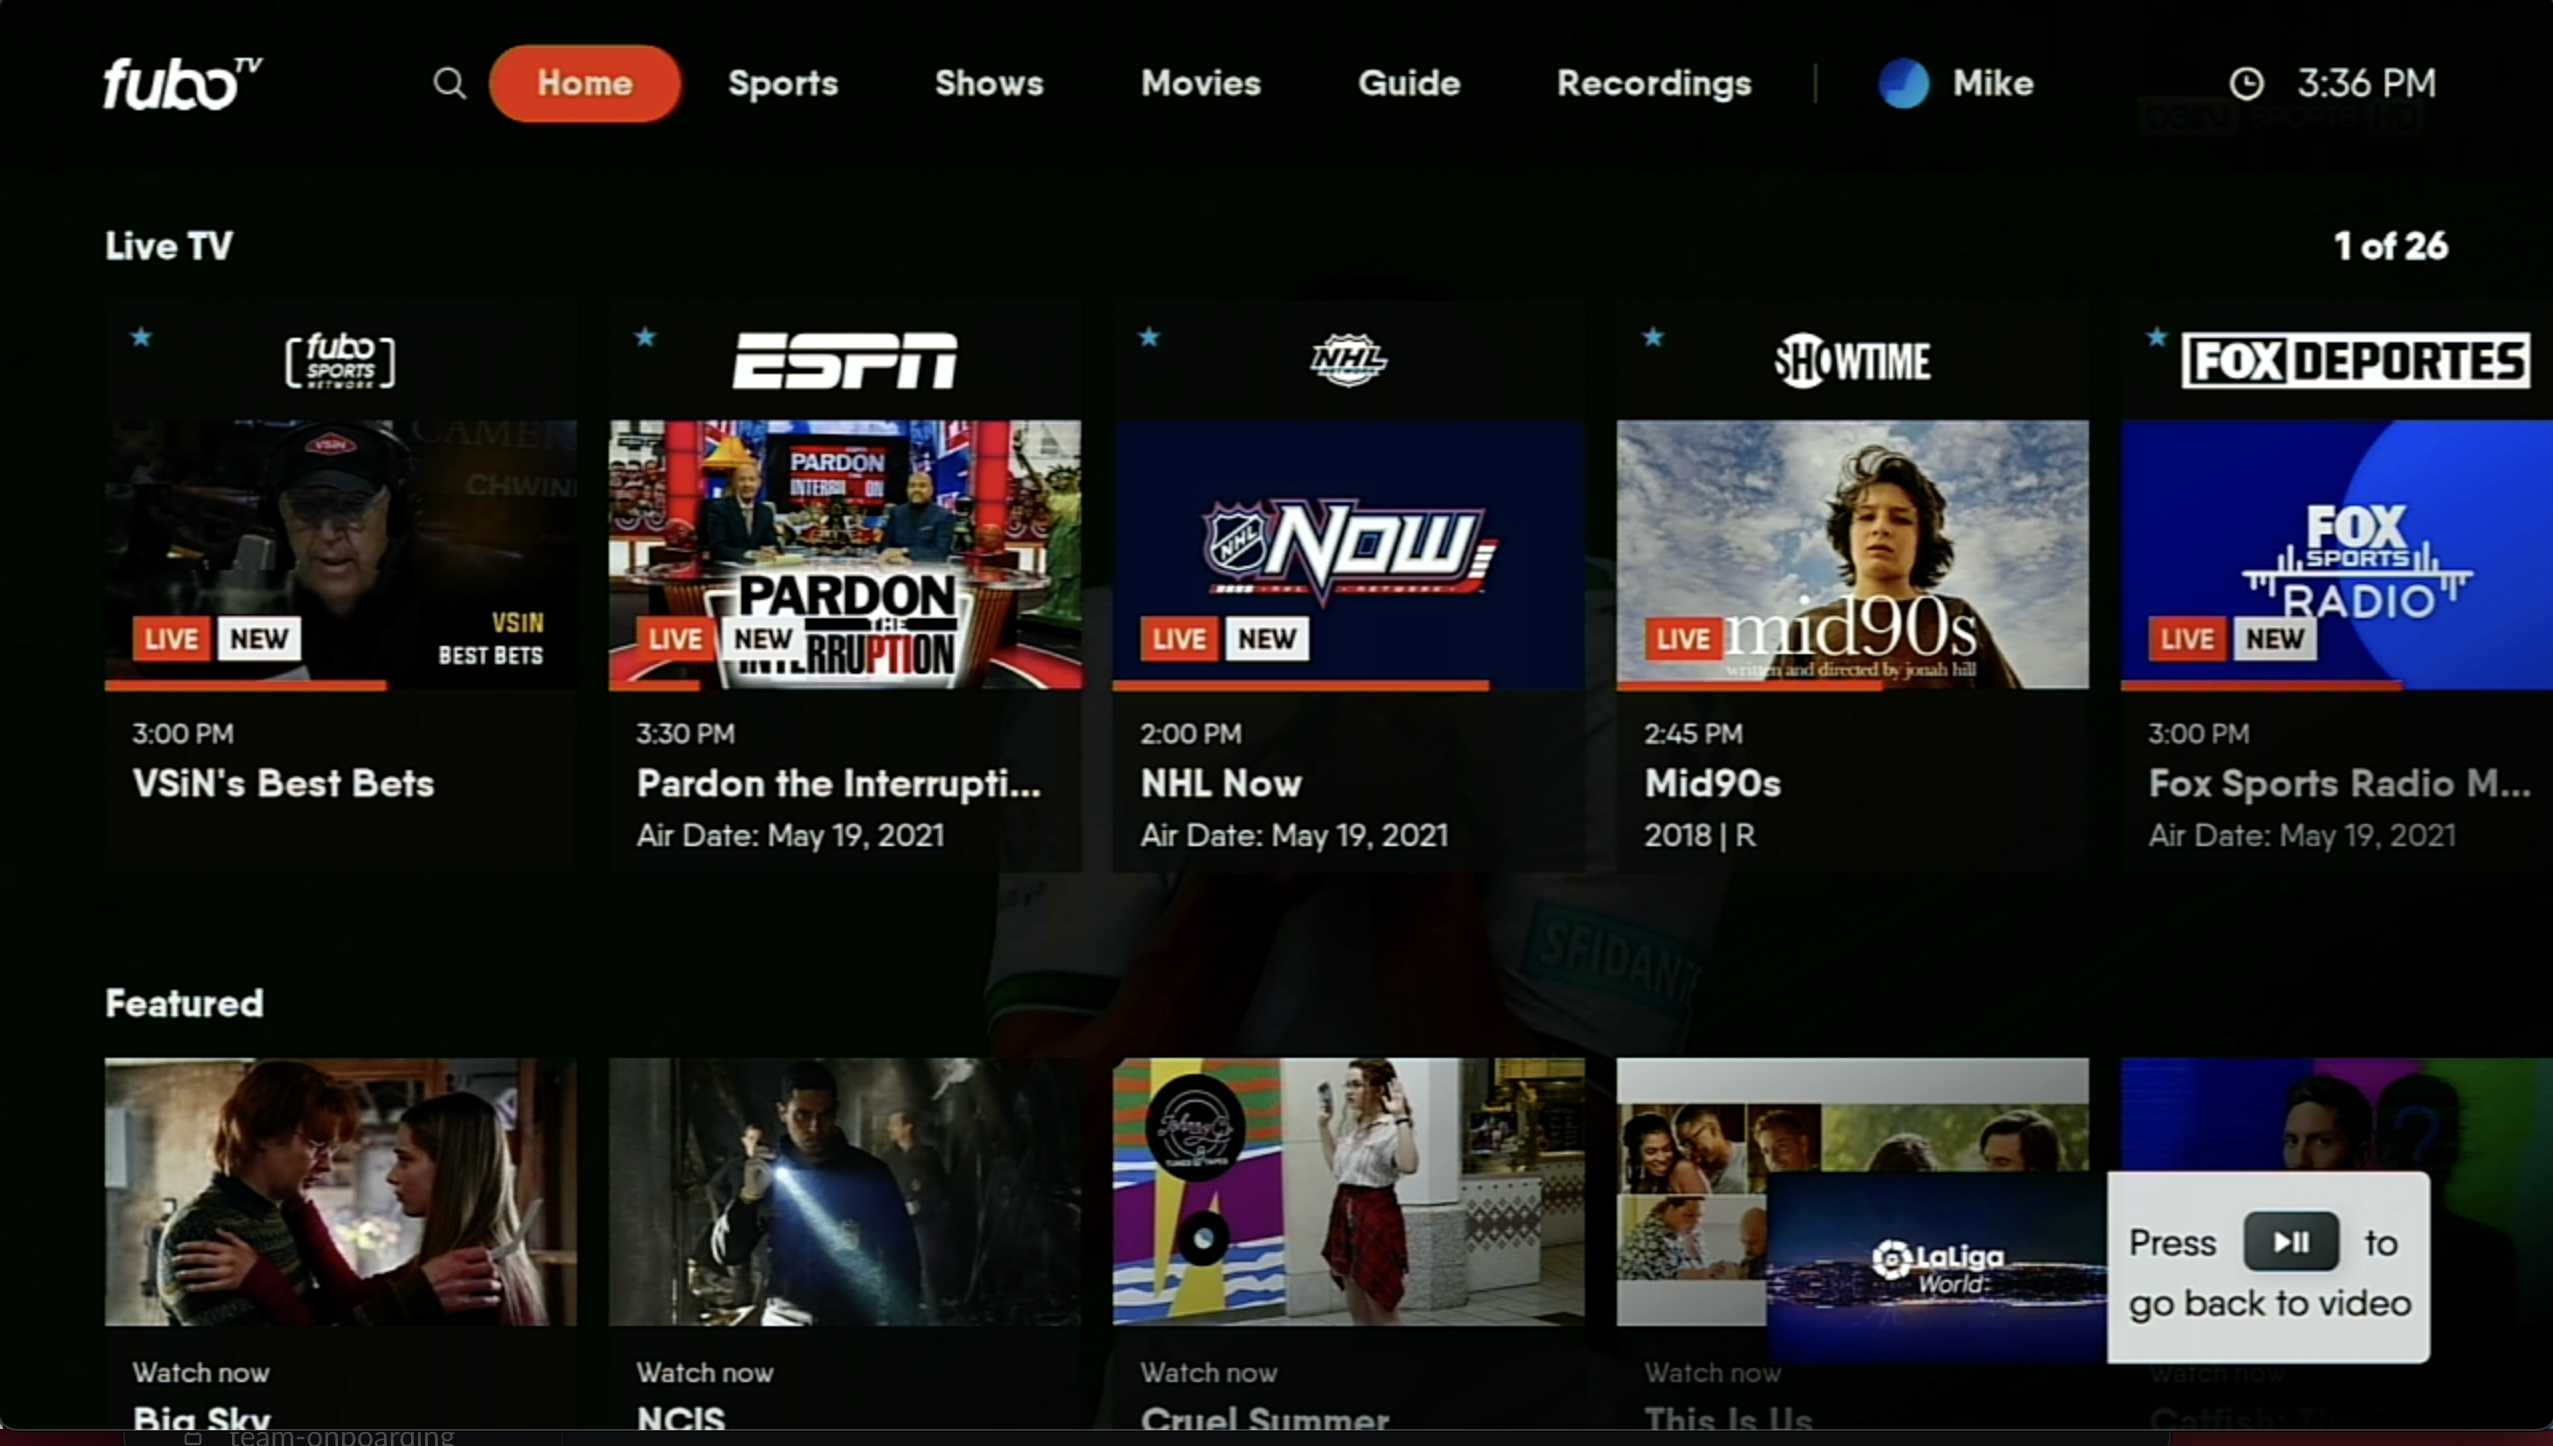 HOME screen of the FuboTV app on Roku